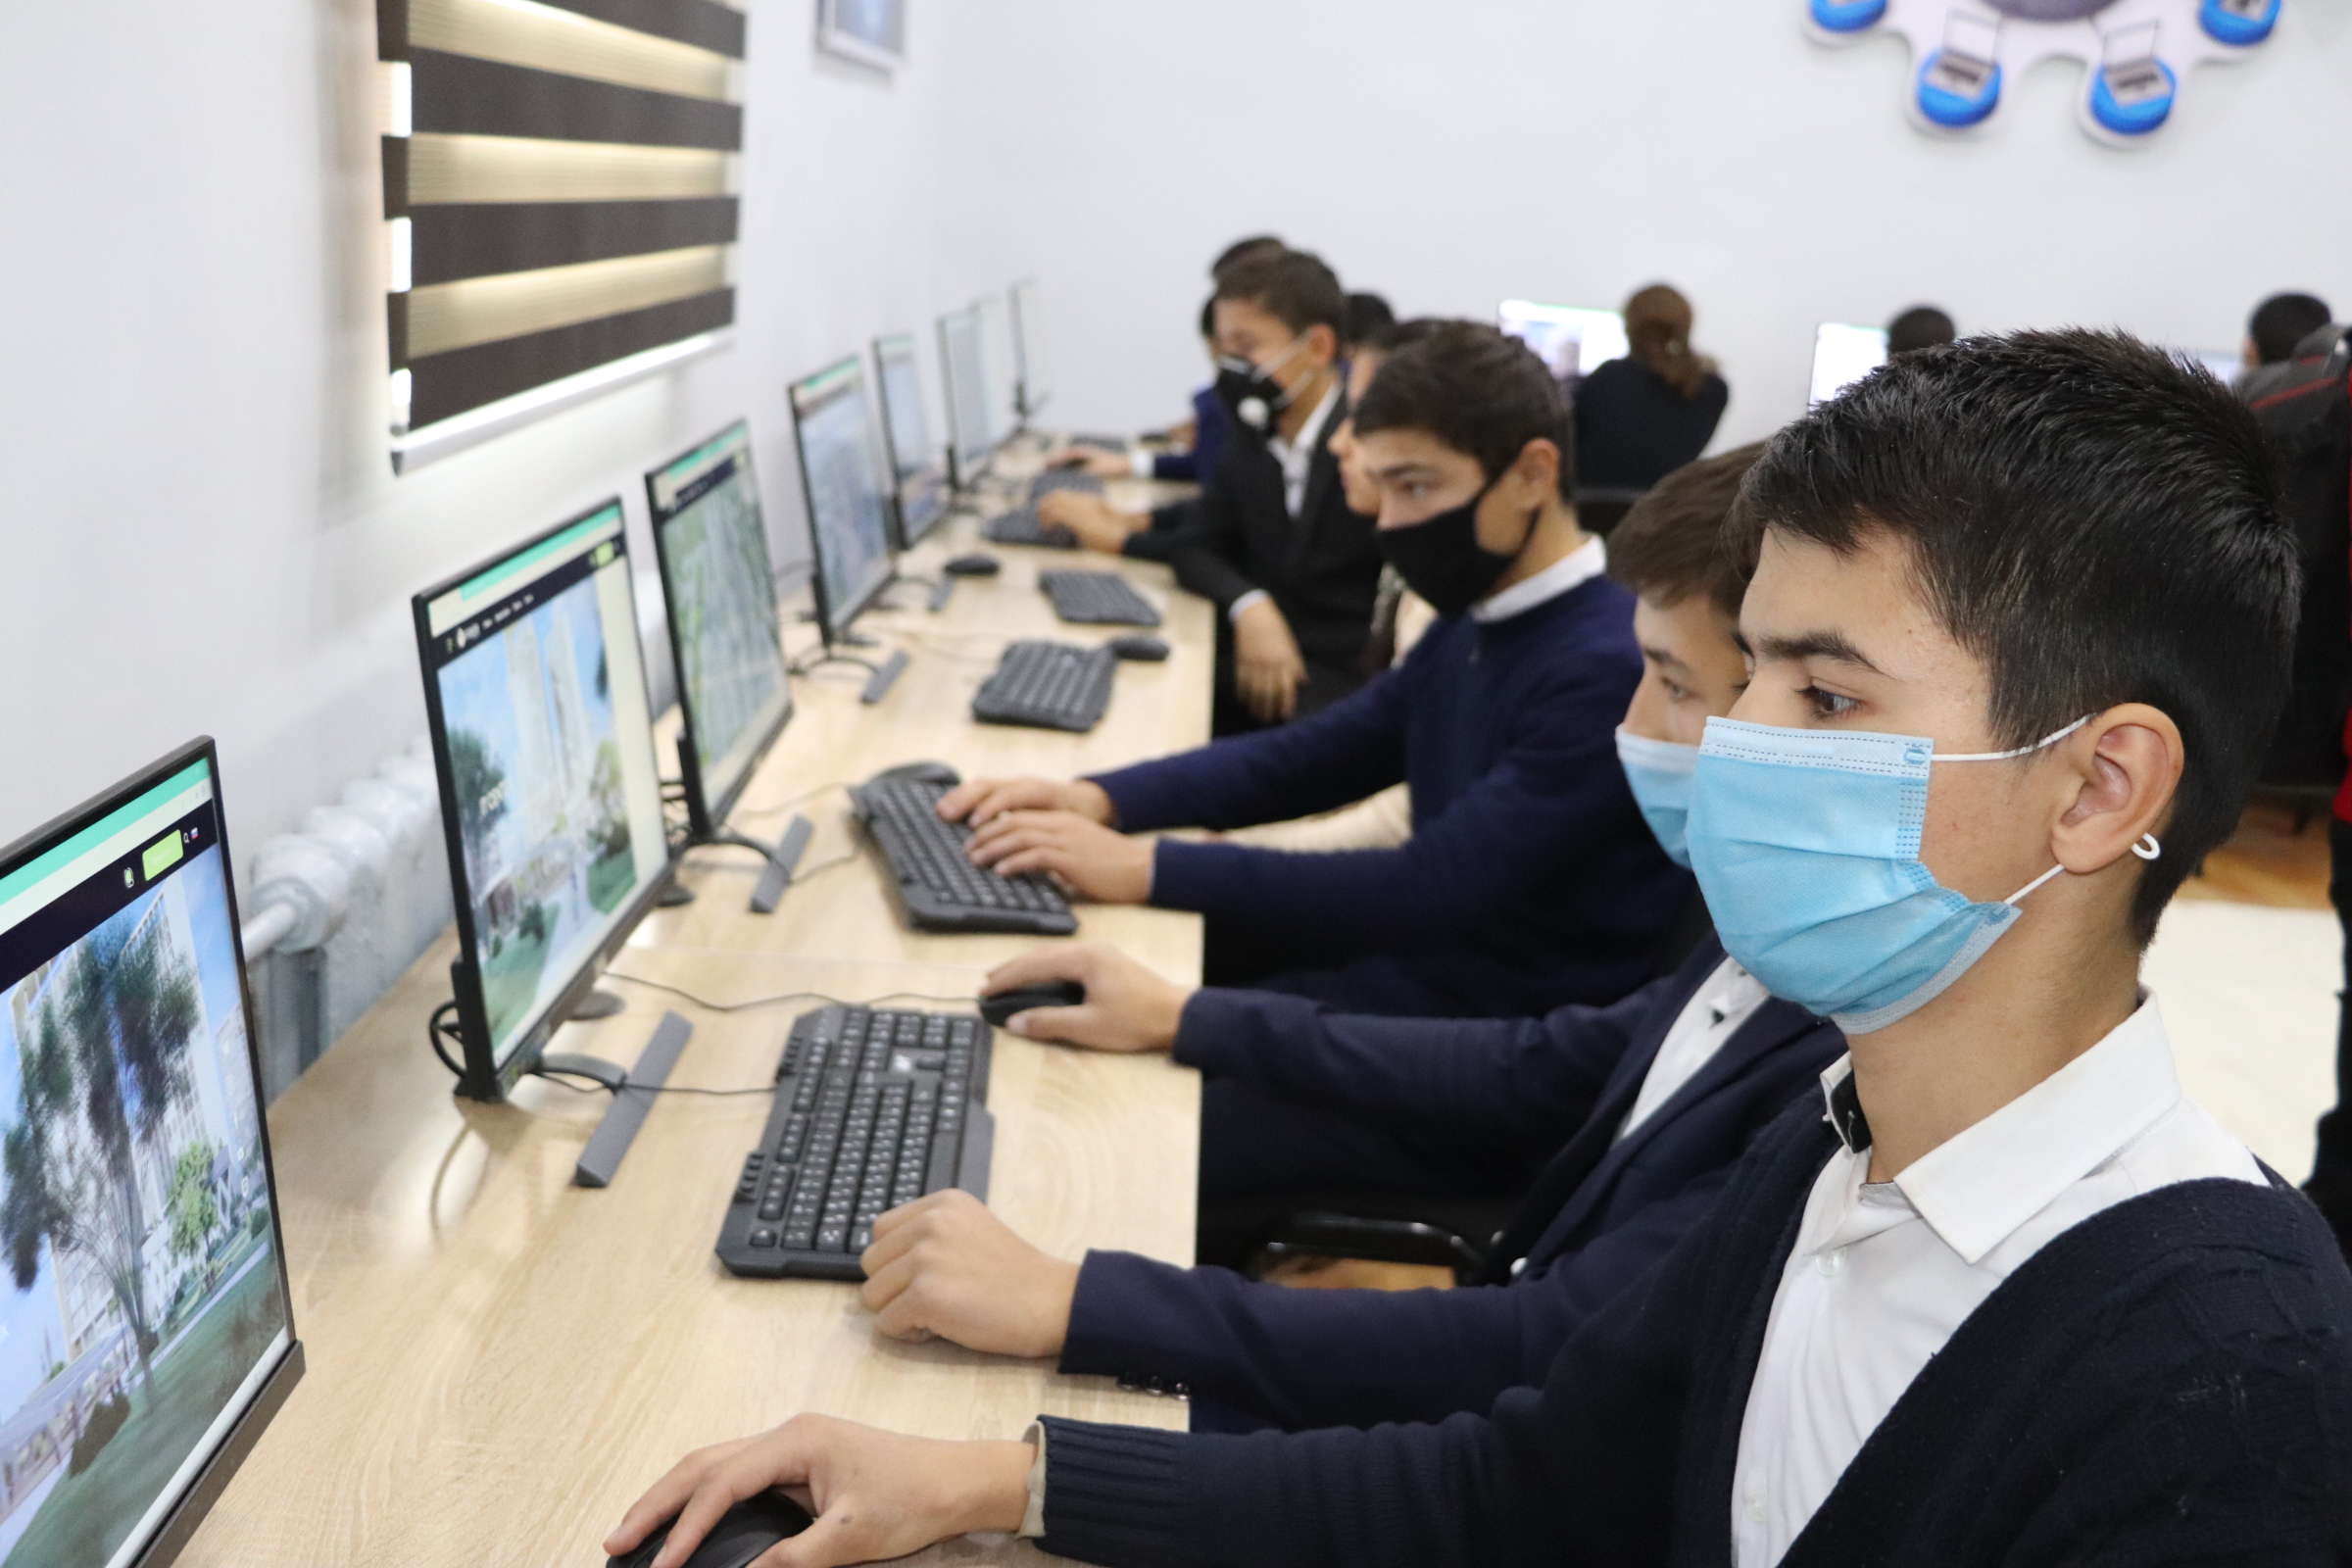 E maktab uz login parol. Информационные технологии в Узбекистане. Компьютер технологиялари. Информатика ахборот технологиялари. Современные технологии в Узбекистане.